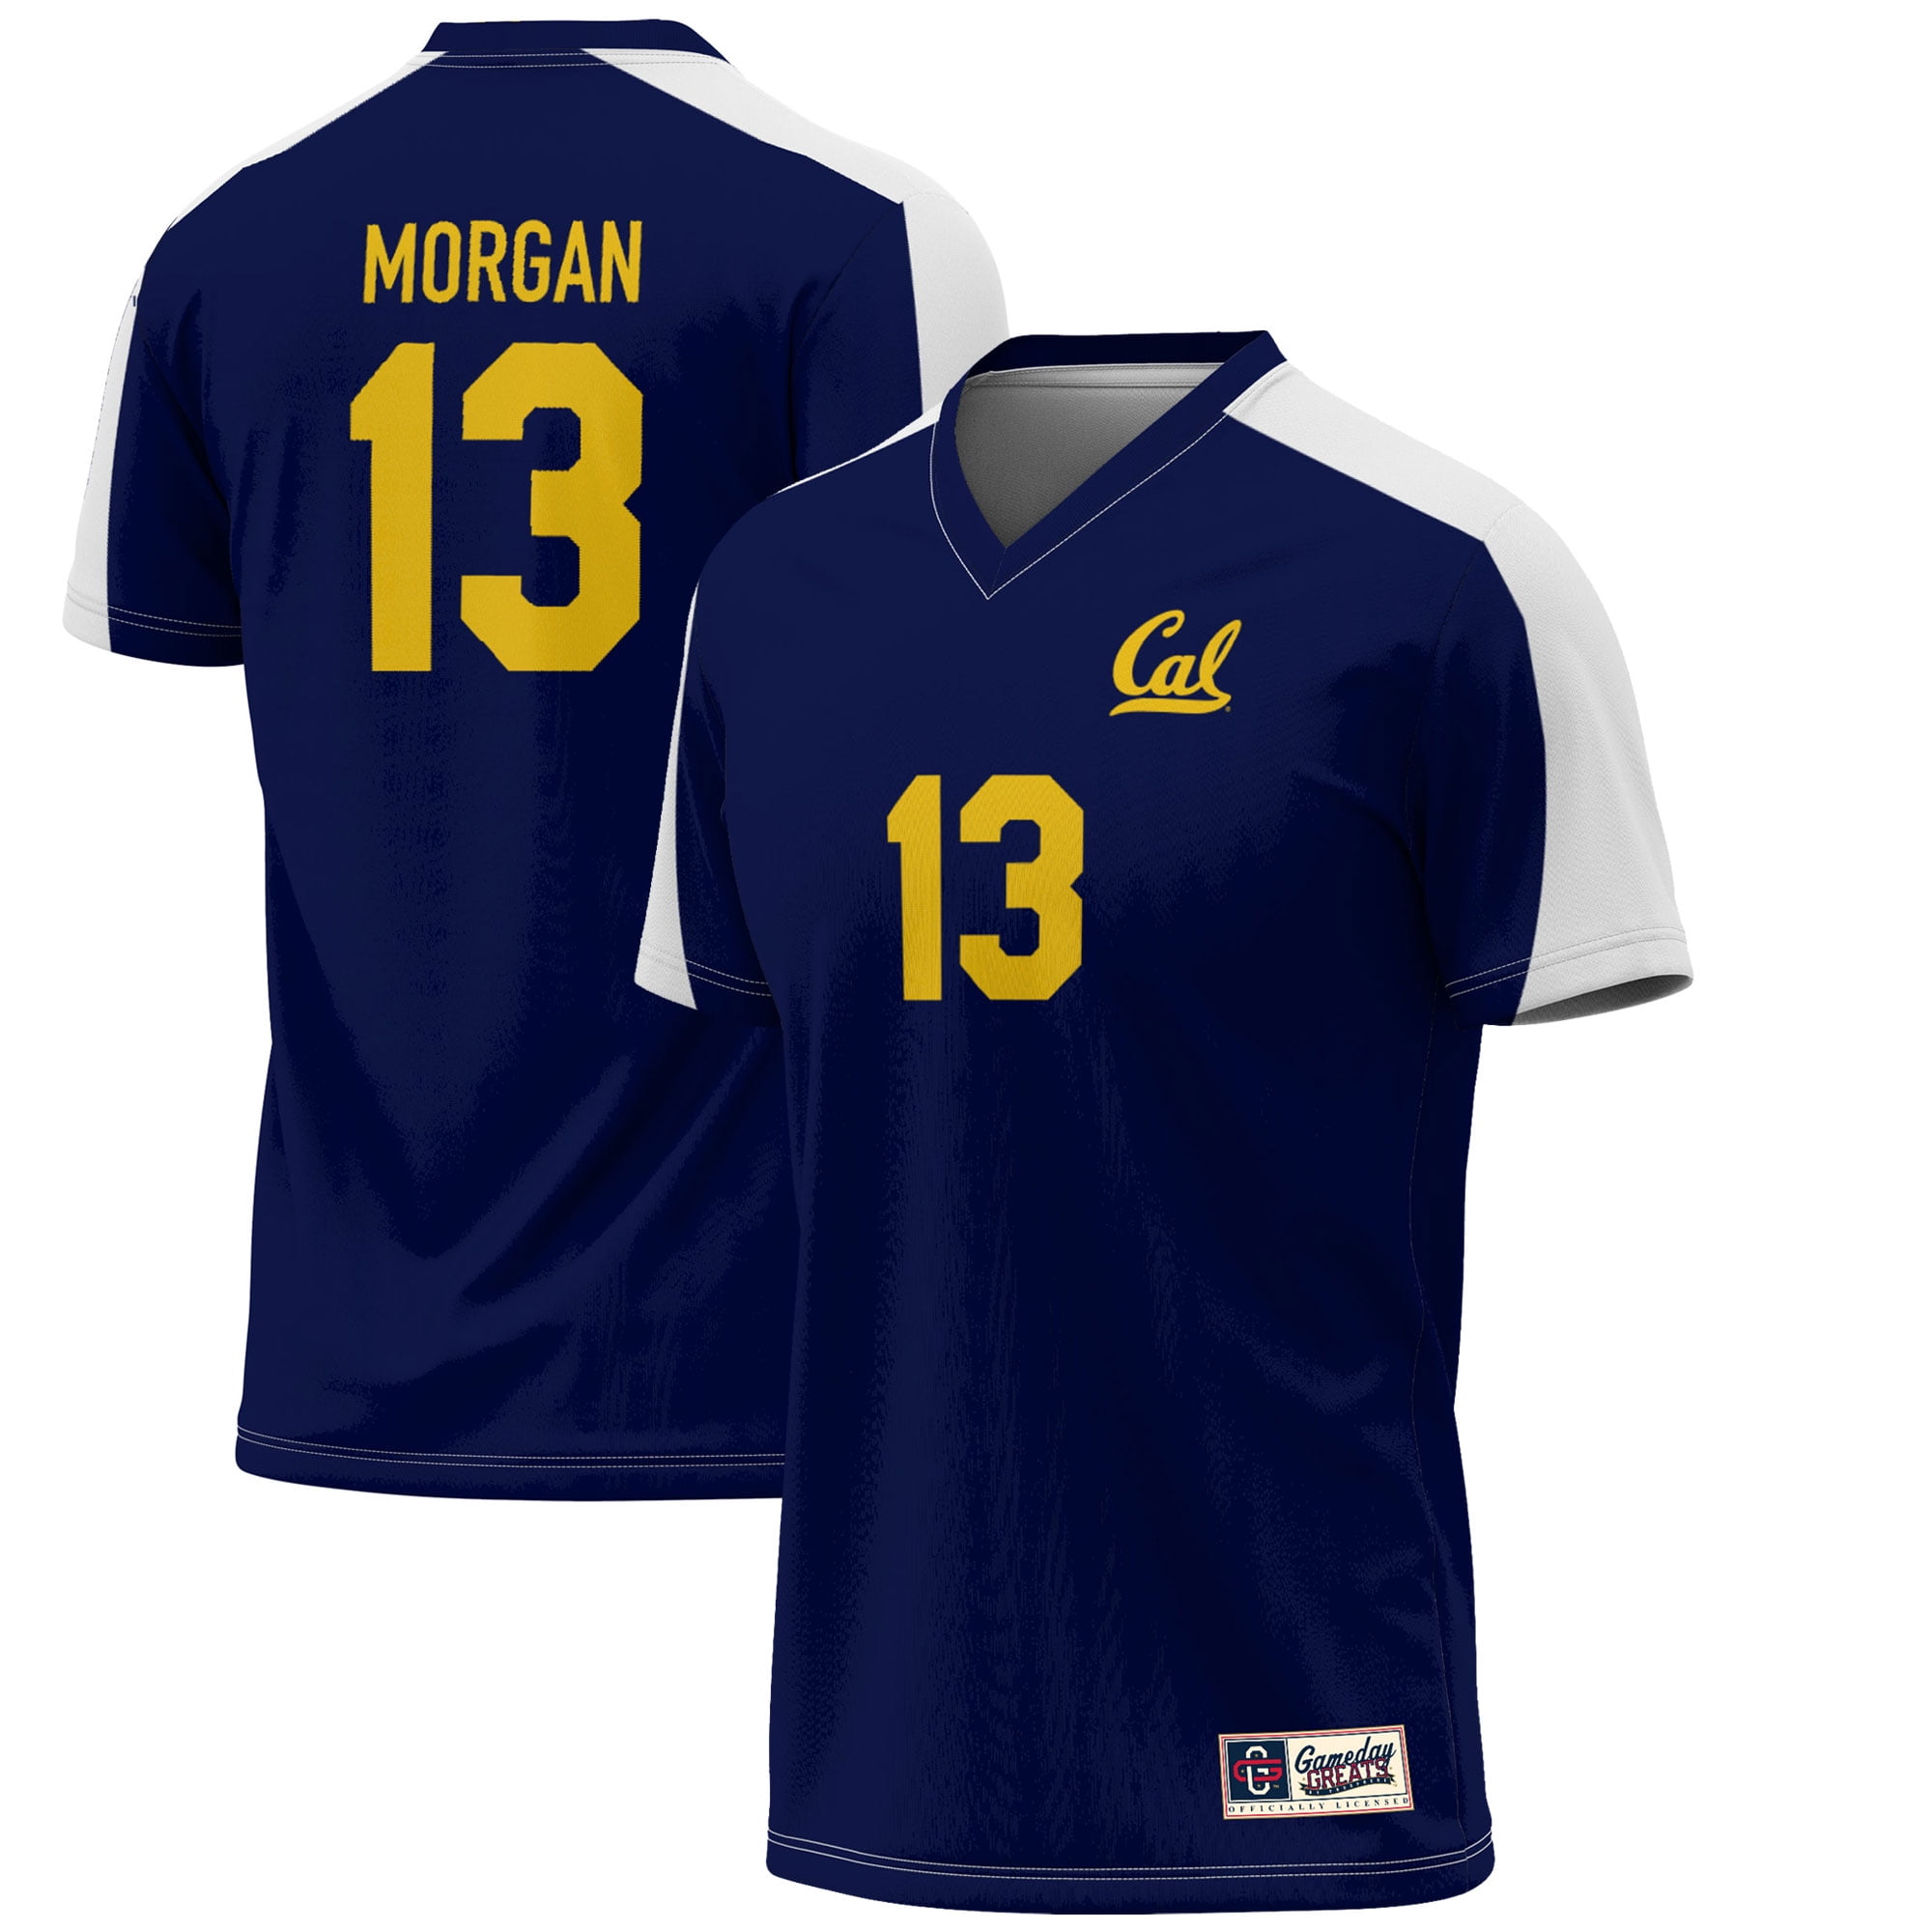 Moses Morgan replica jersey